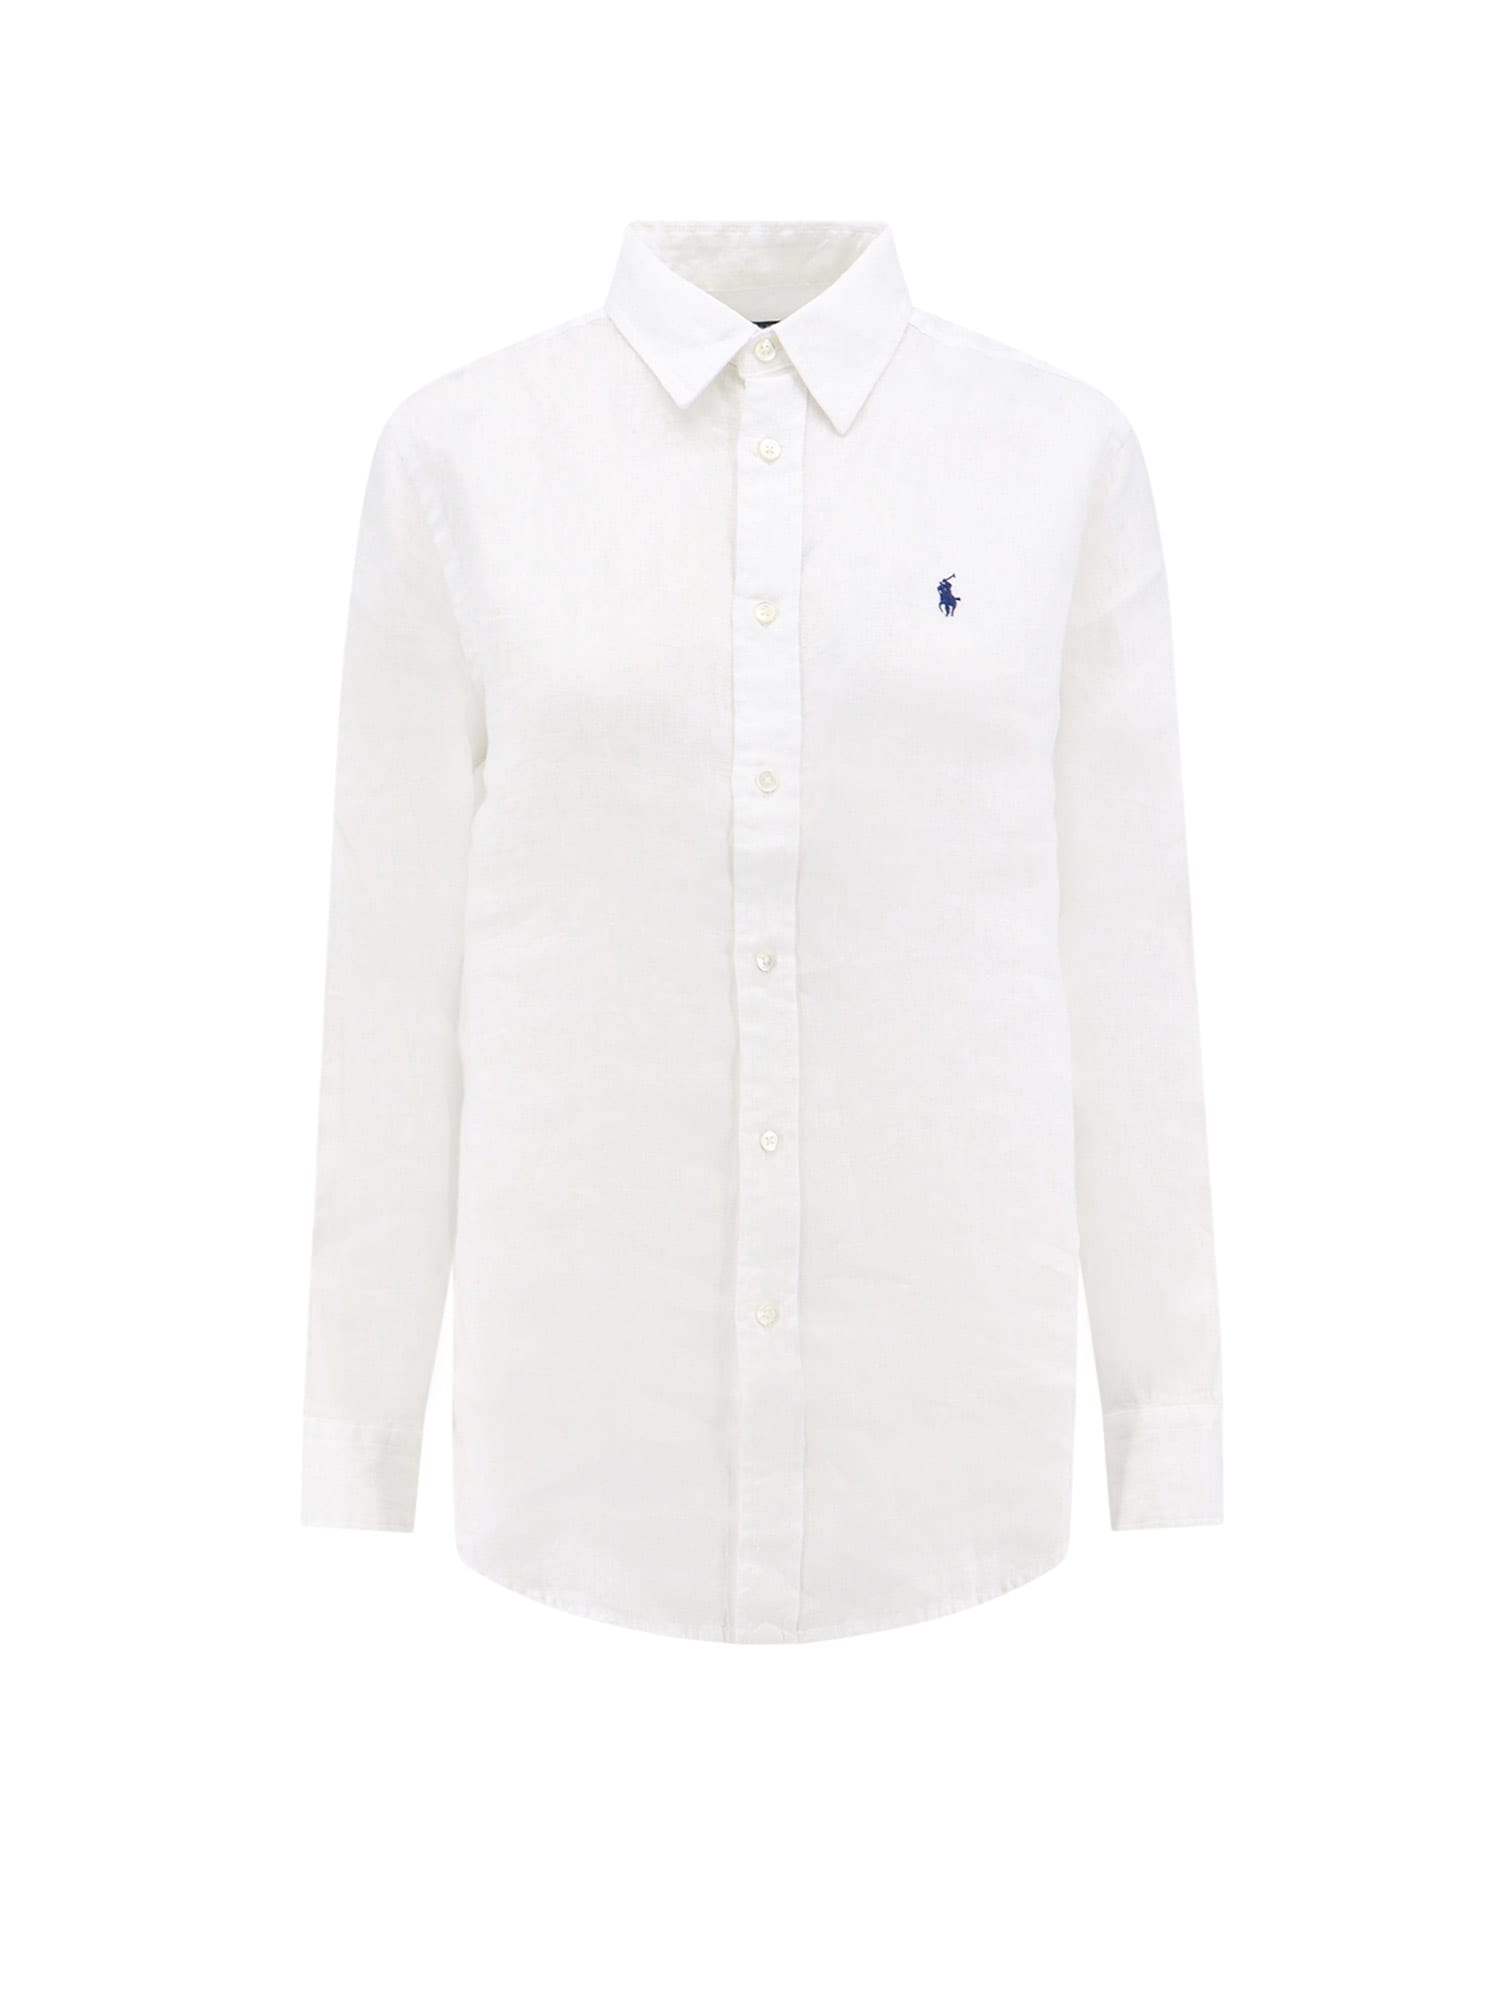 Shirt Polo Ralph Lauren - WHITE - female - Size: Large